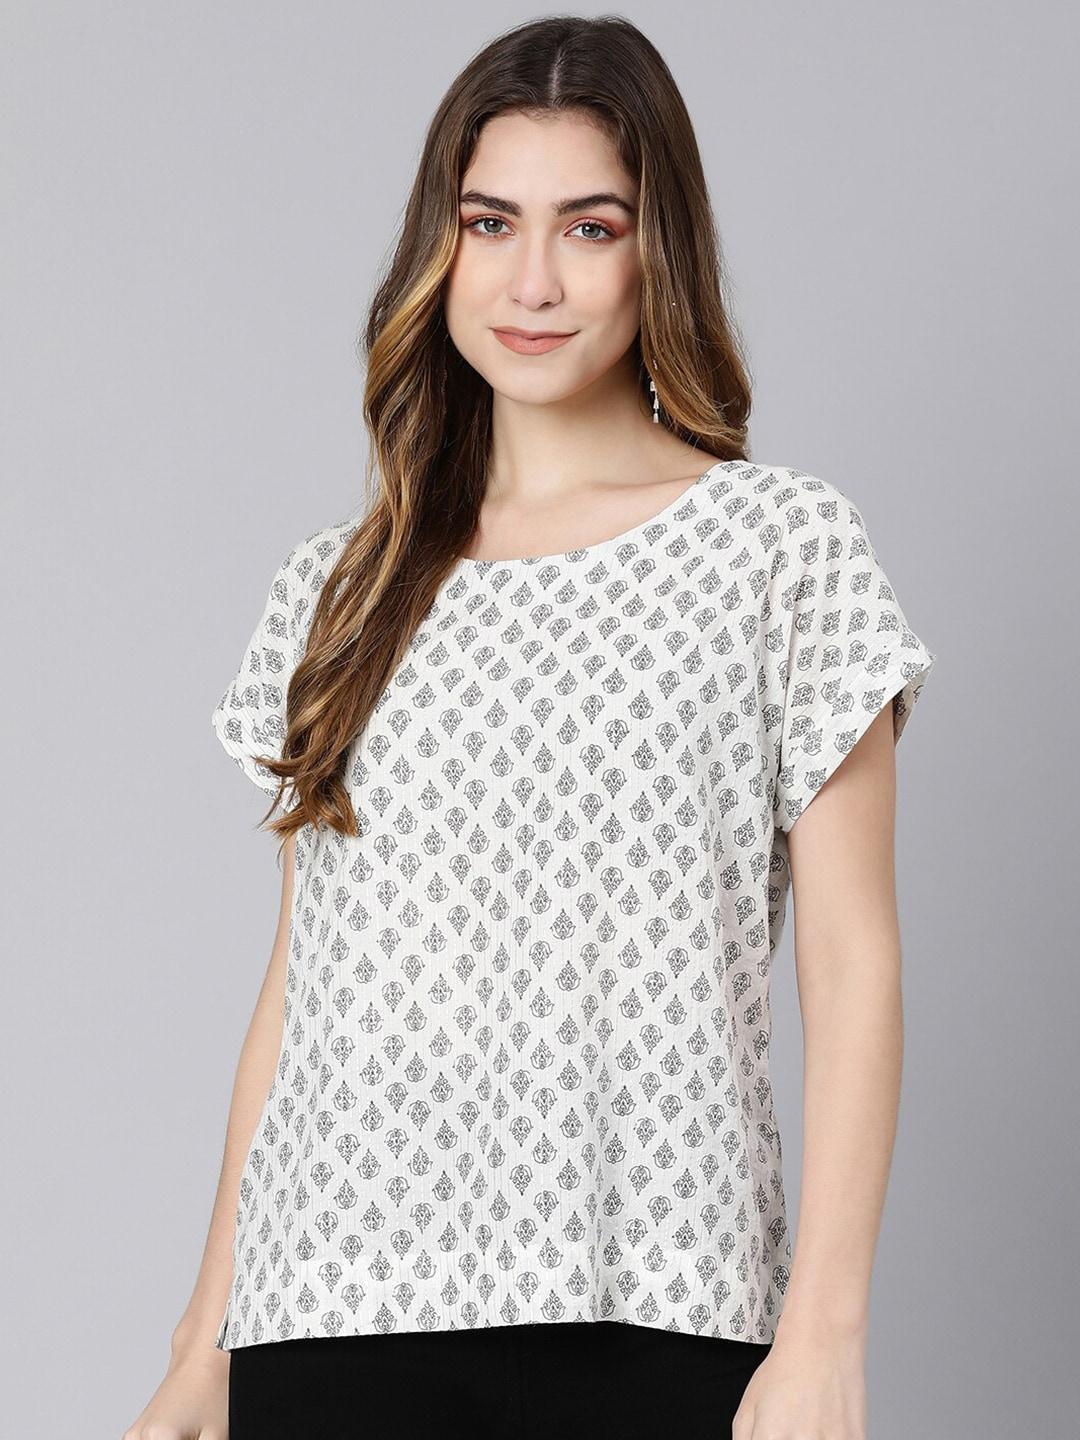 oxolloxo-white-print-pure-cotton-top